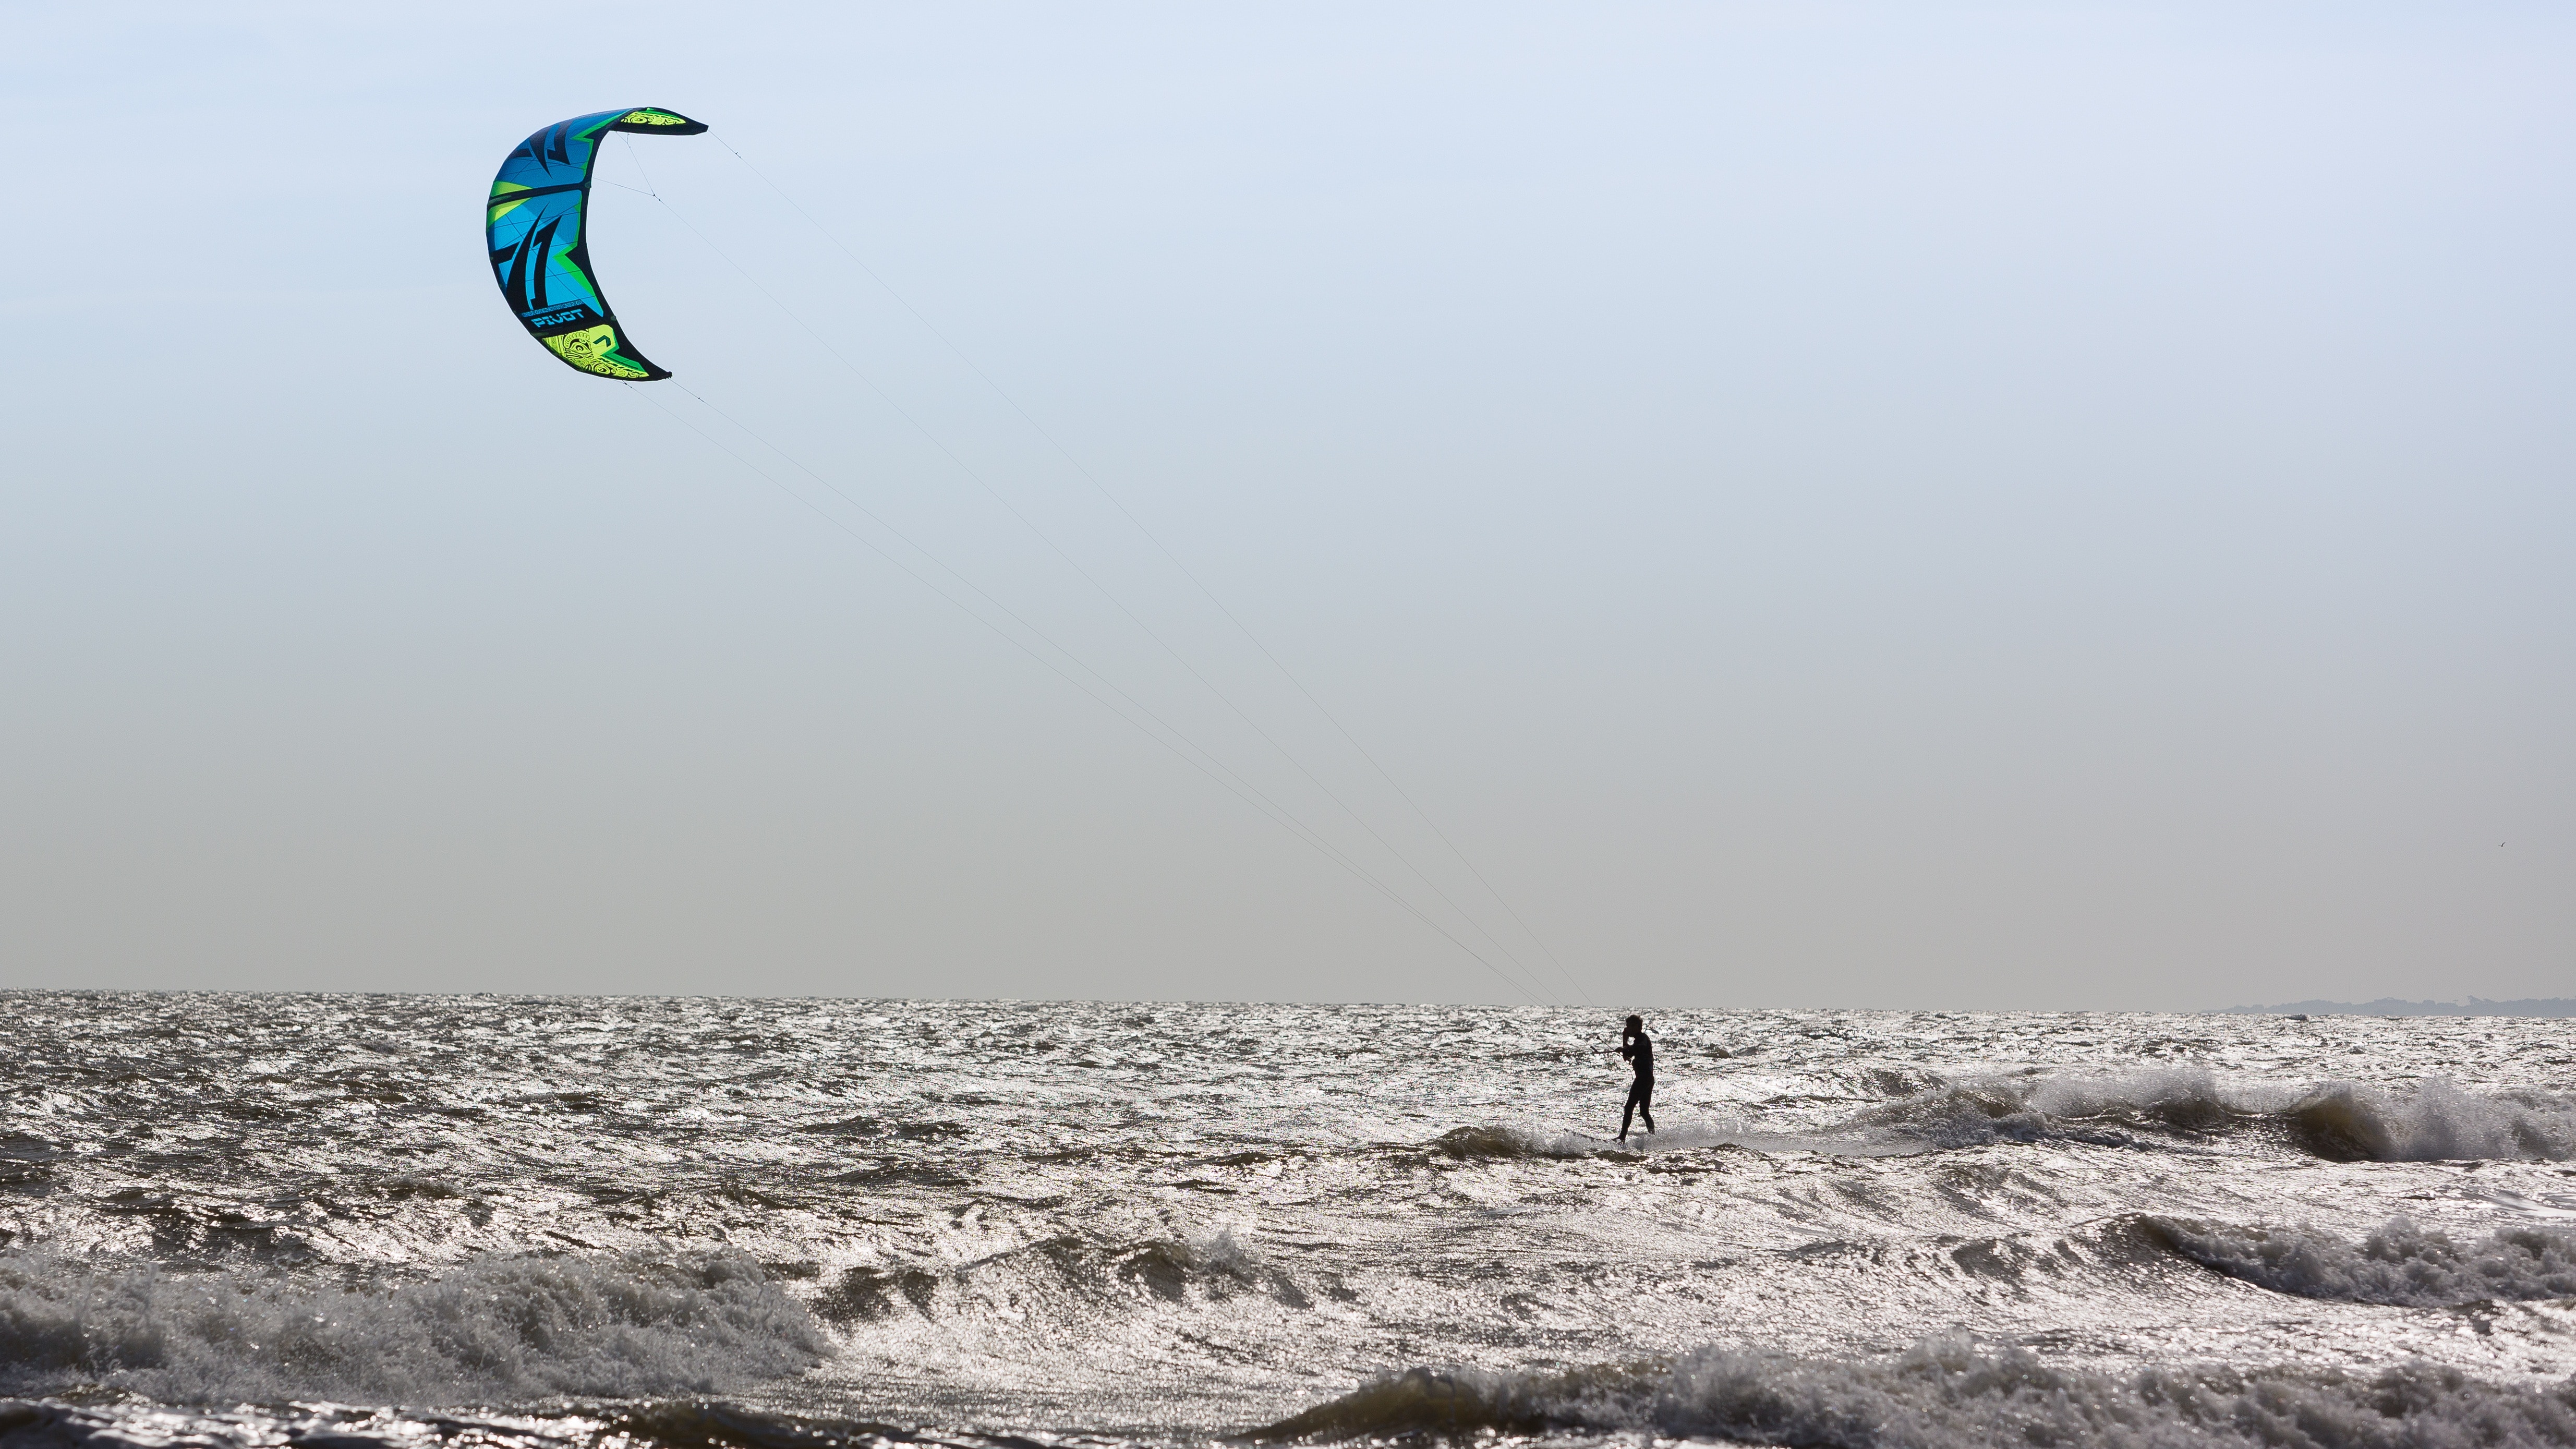 blue green and black kite